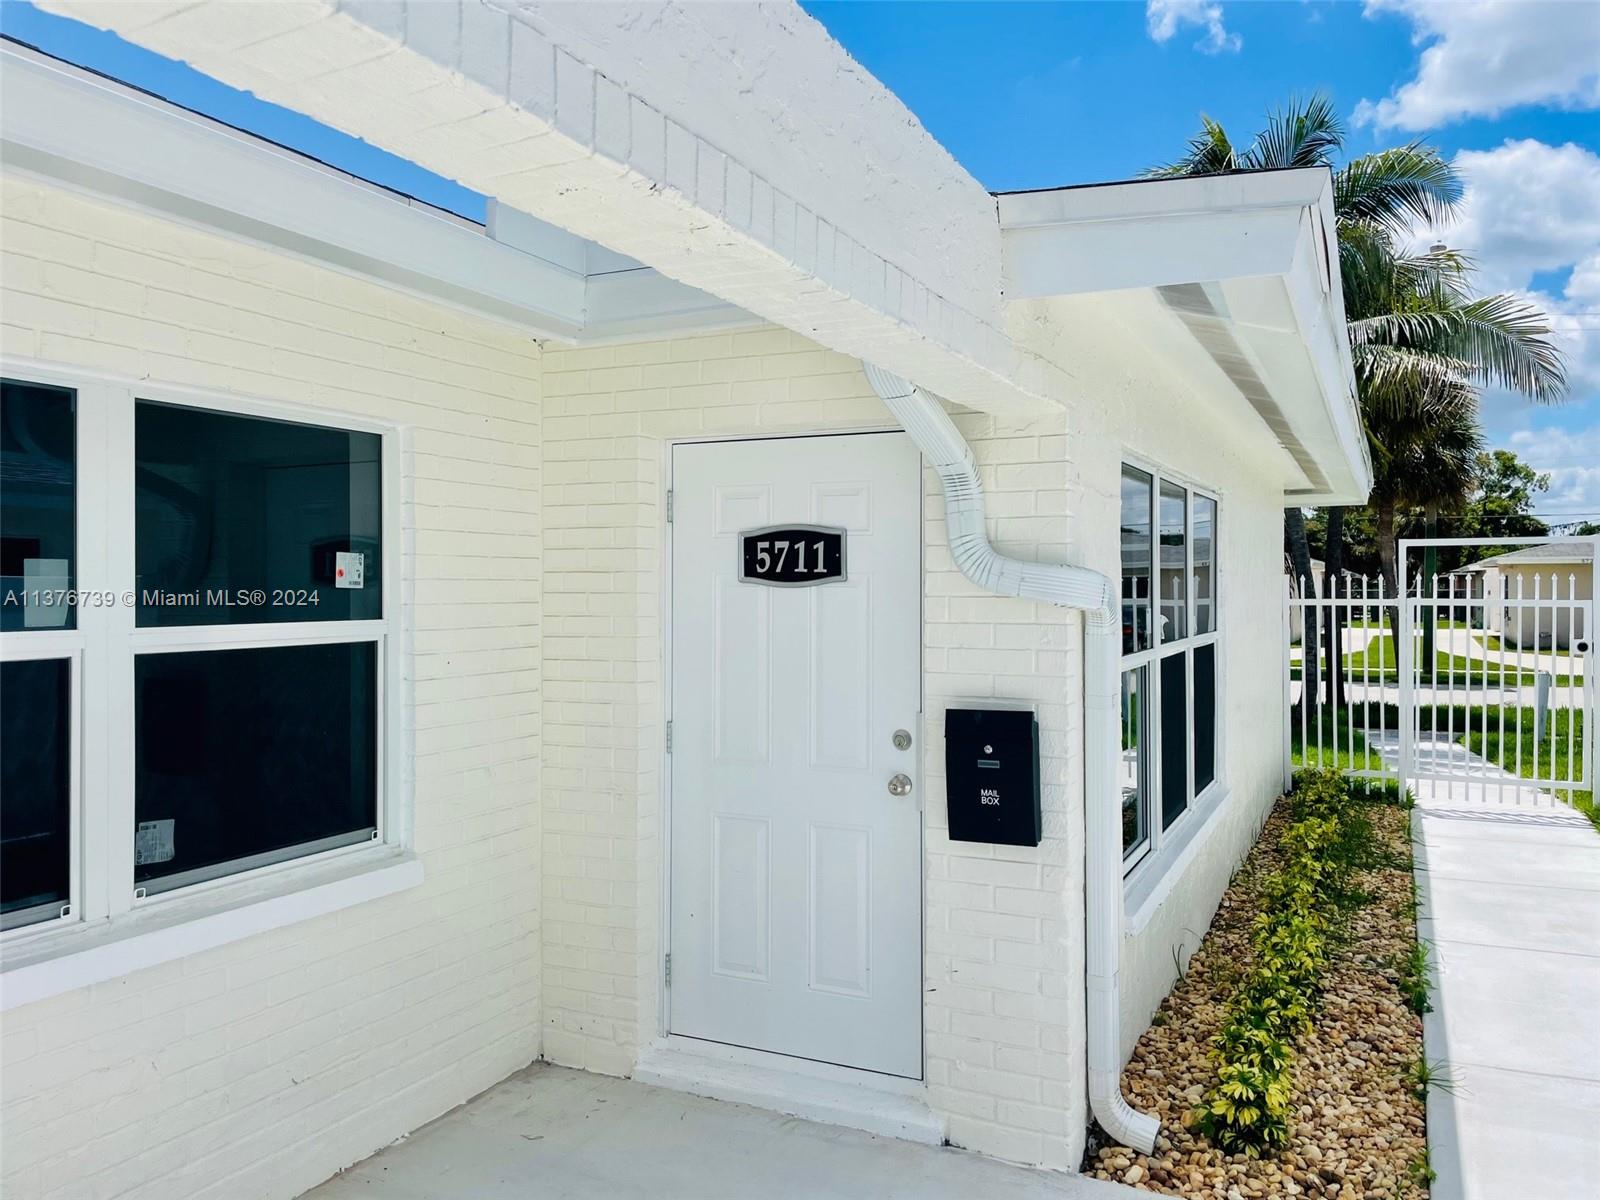 Rental Property at 5711 Nw 28th St, Lauderhill, Miami-Dade County, Florida -  - $1,026,000 MO.